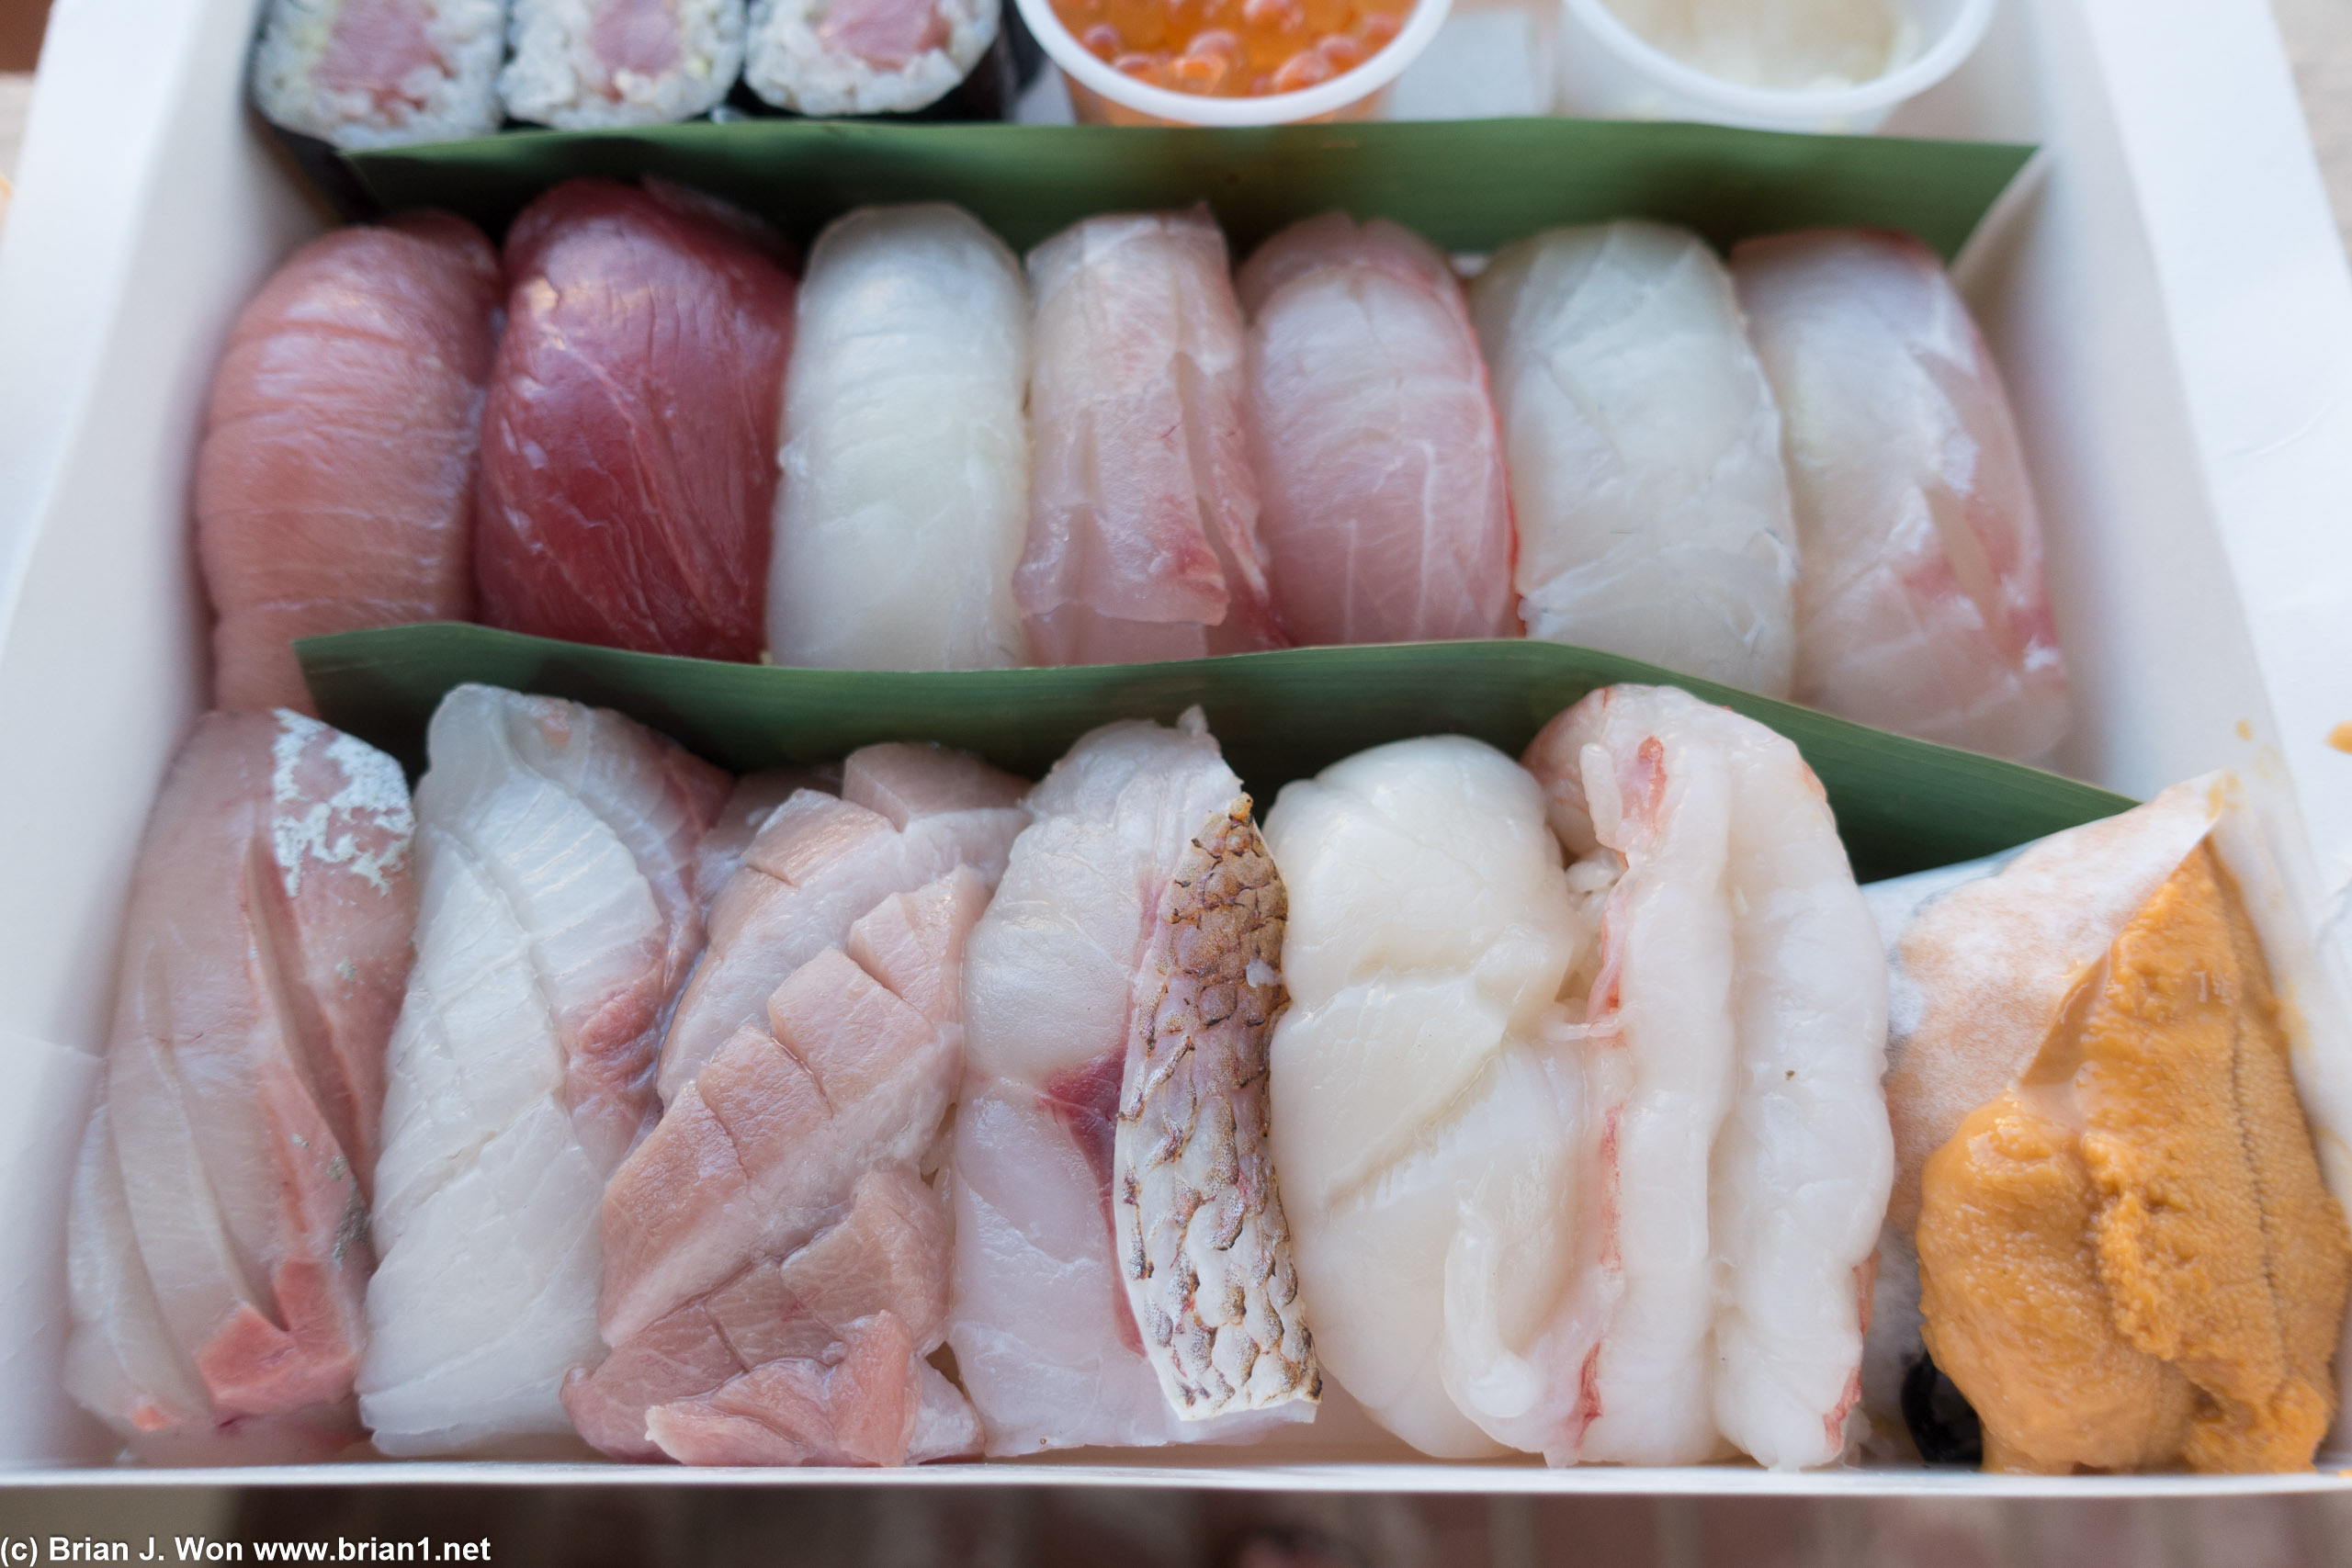 Foreground is kanpachi (amberjack), shimaaji (jack mackerel), nodoguro (black throat seaperch), ama ebi (sweet shrimp), uni (sea urchin).